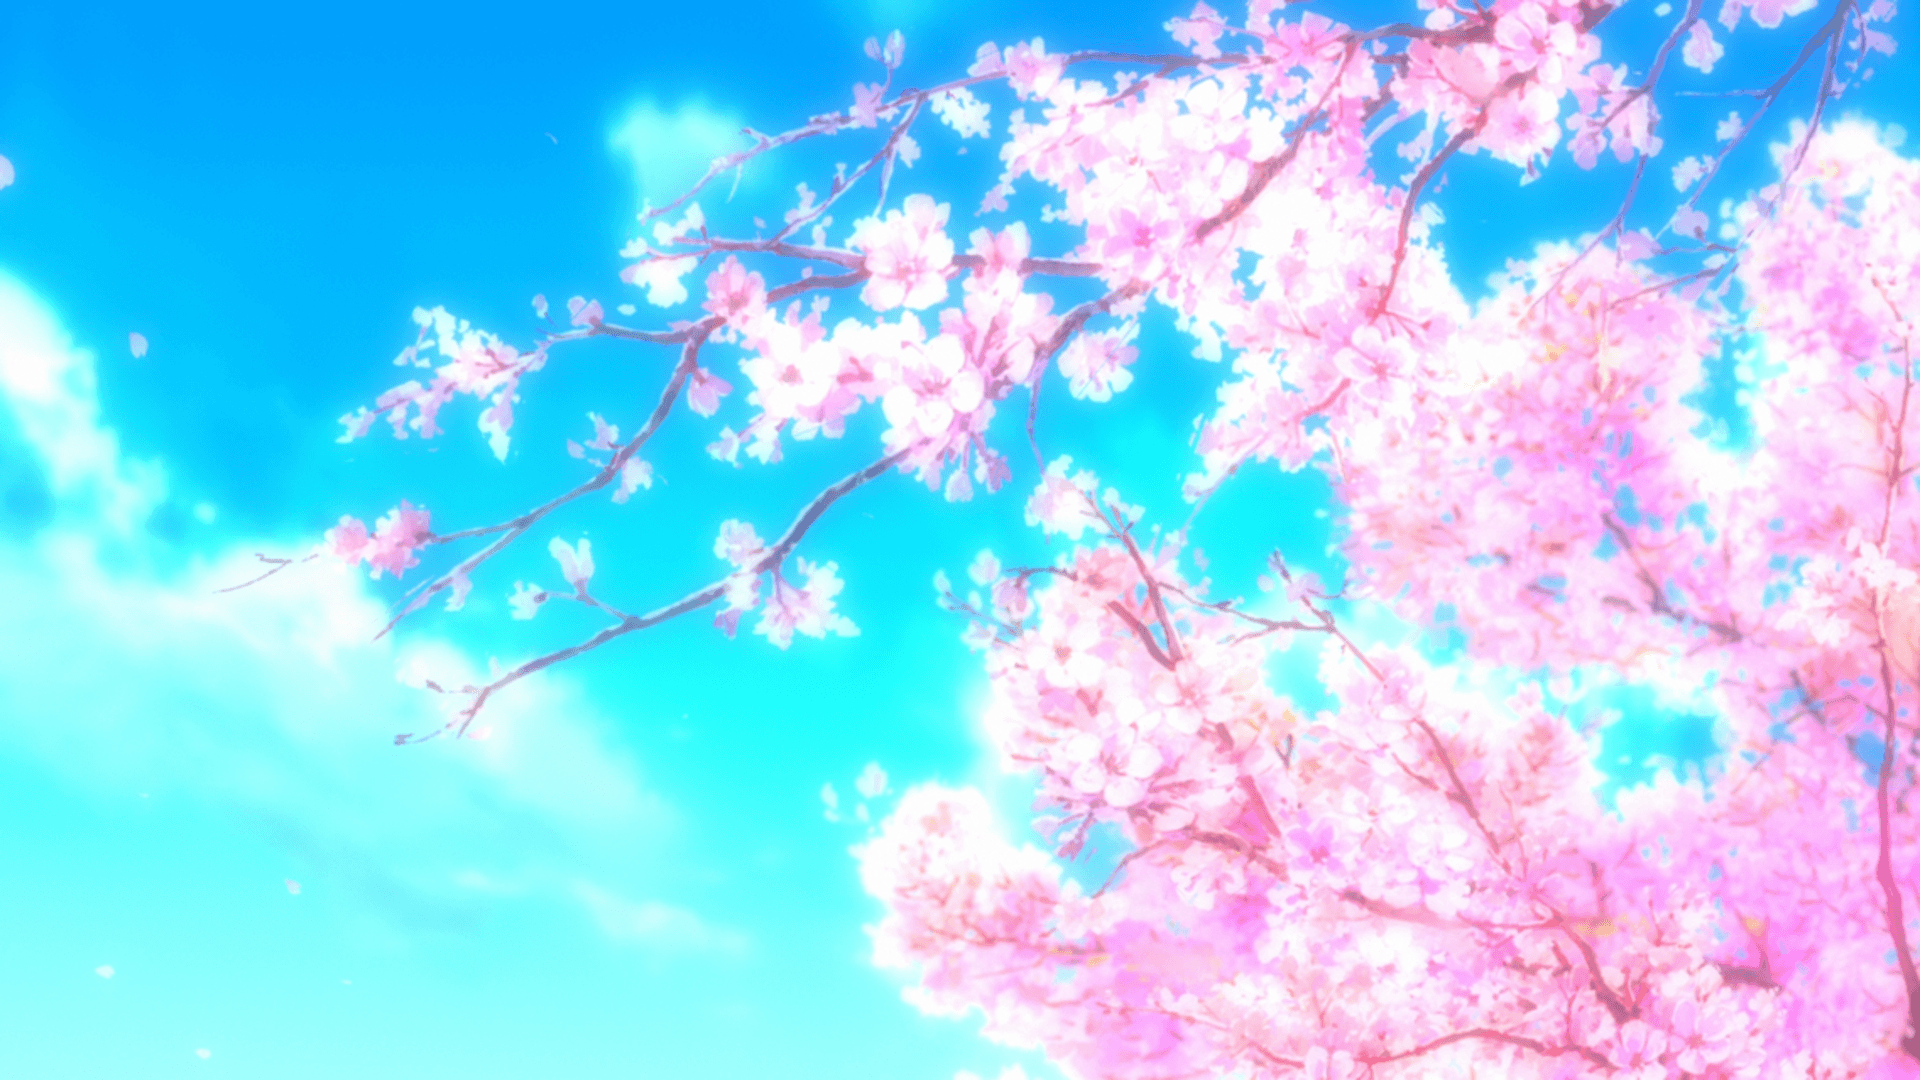 HD desktop wallpaper Anime Fantasy Tree Cherry Blossom Original  download free picture 871228